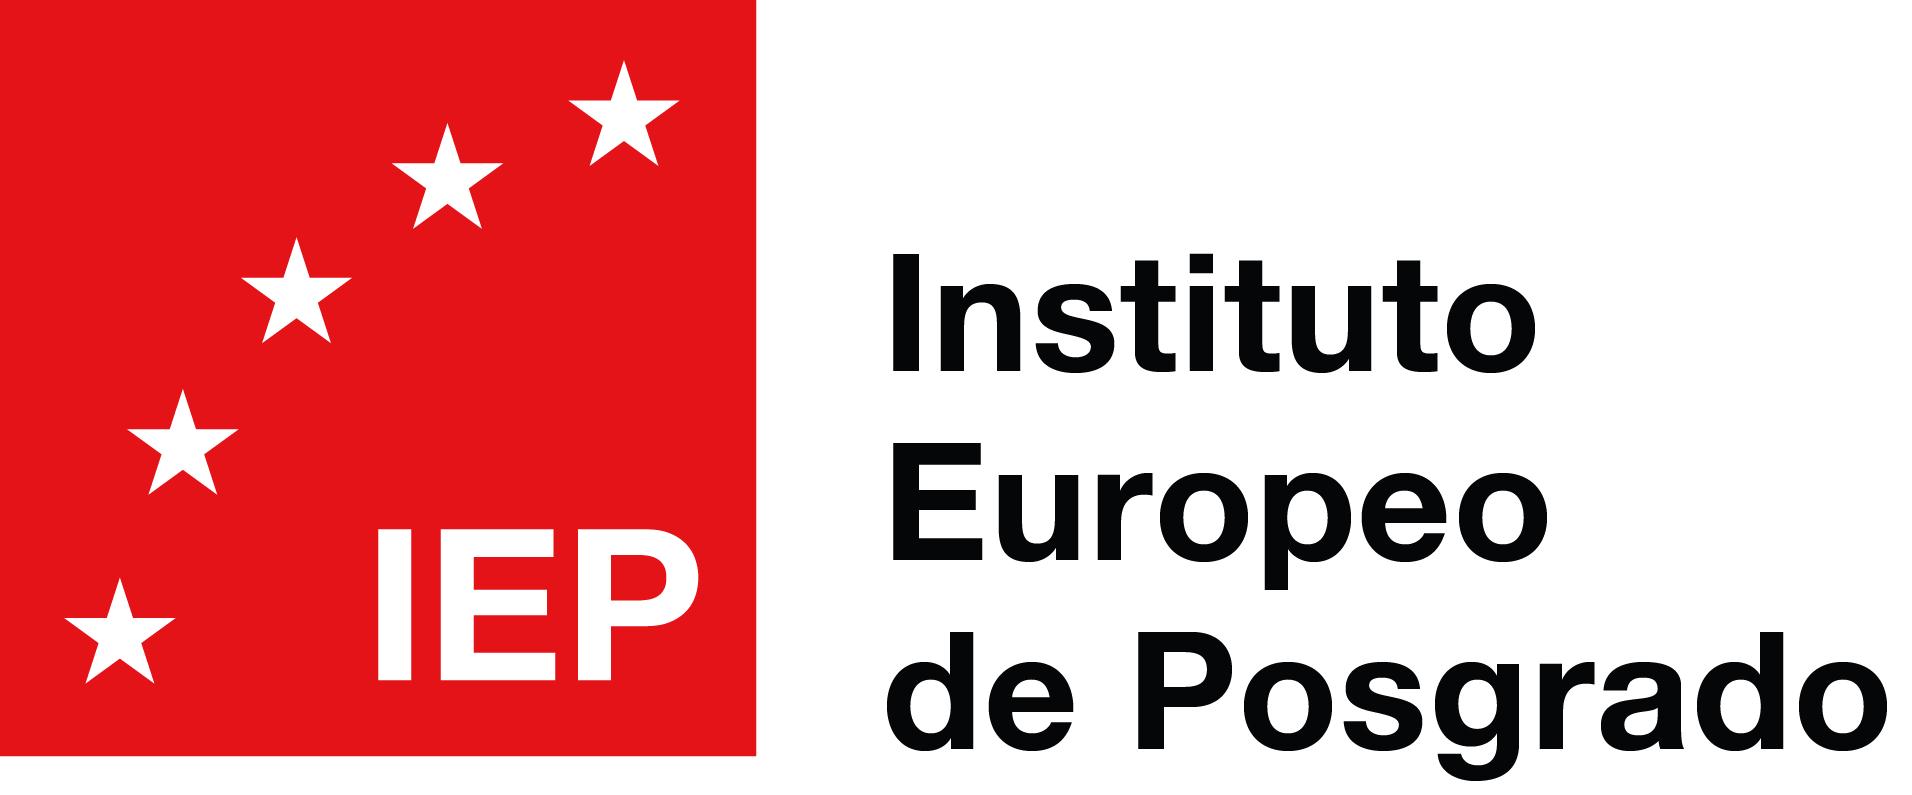 Máster MBA en International Business - IEP - Instituto Europeo de Posgrado